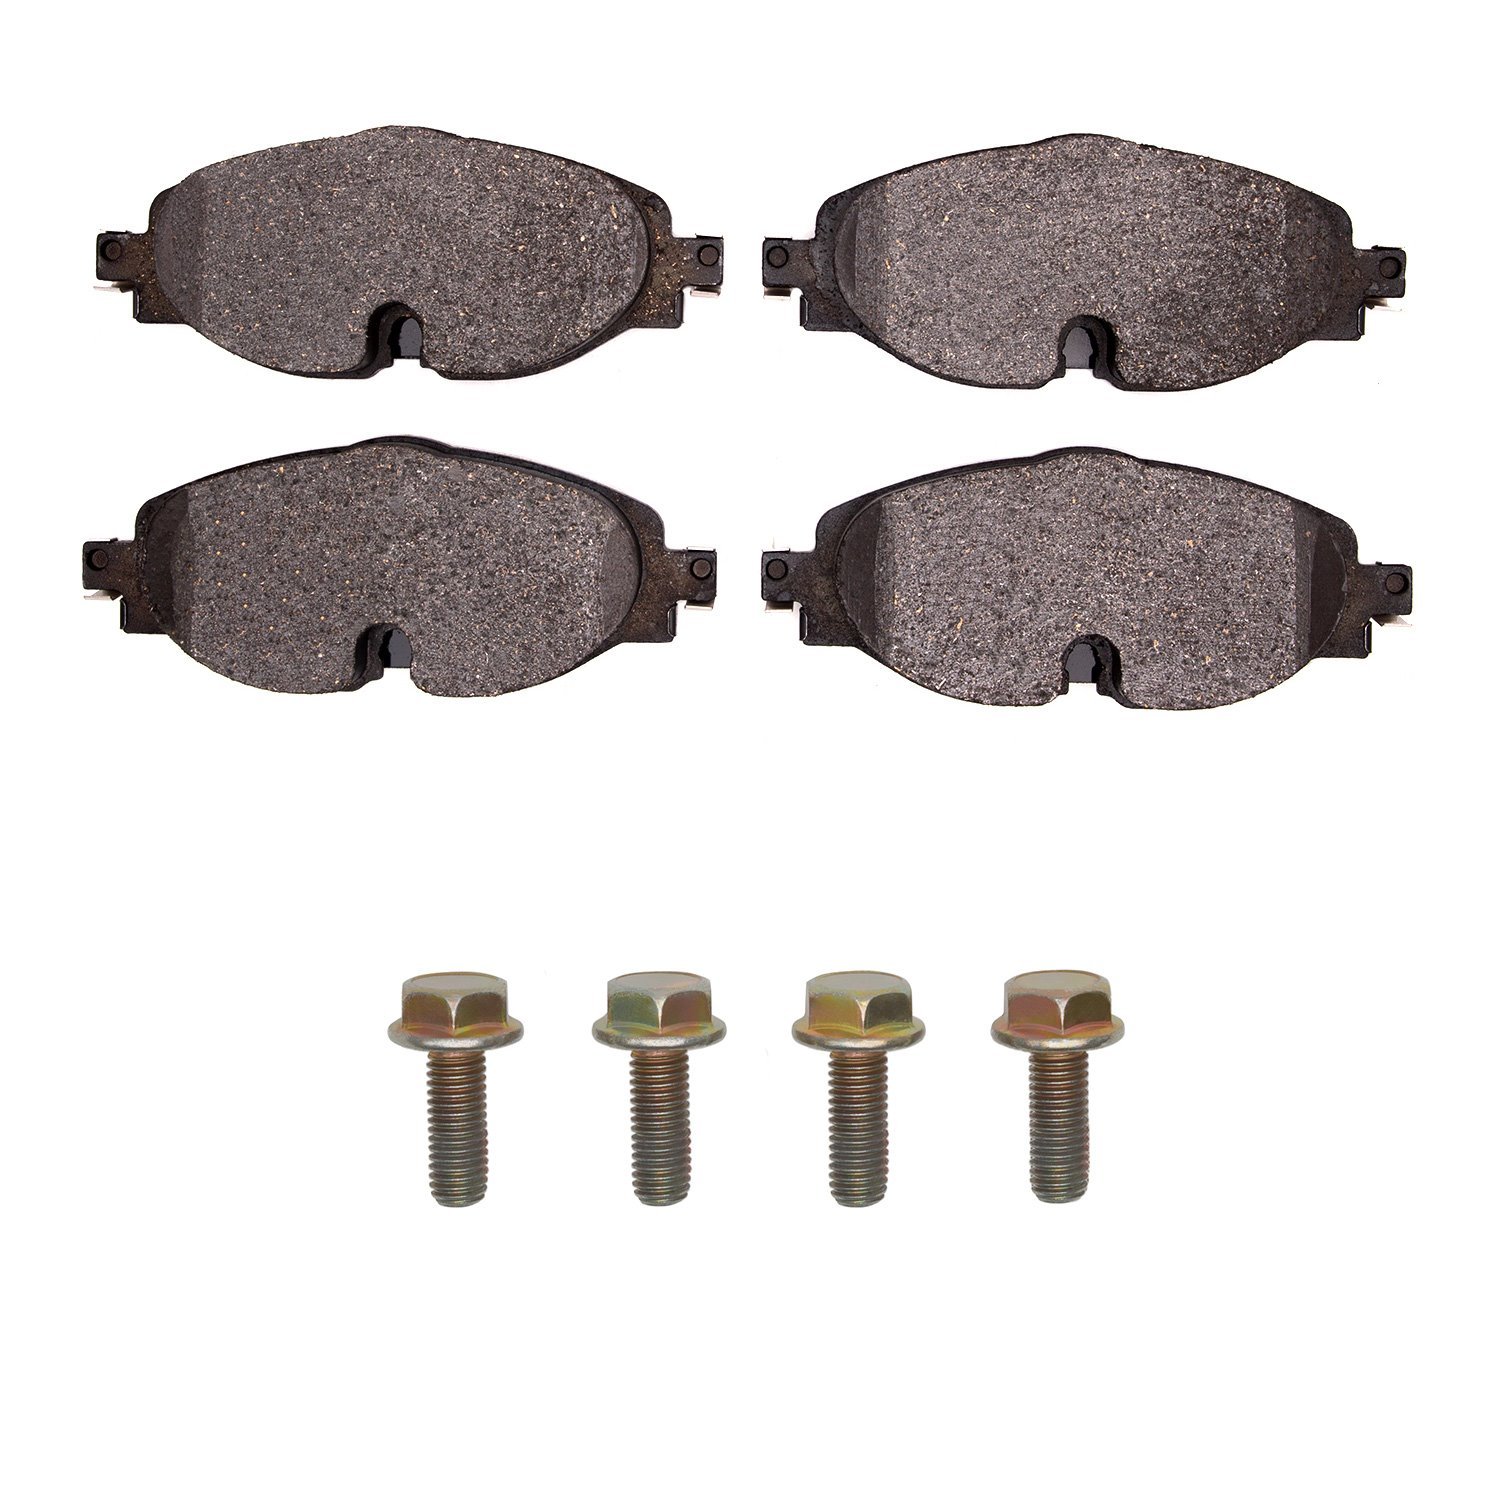 1600-1760-01 5000 Euro Ceramic Brake Pads & Hardware Kit, Fits Select Multiple Makes/Models, Position: Front